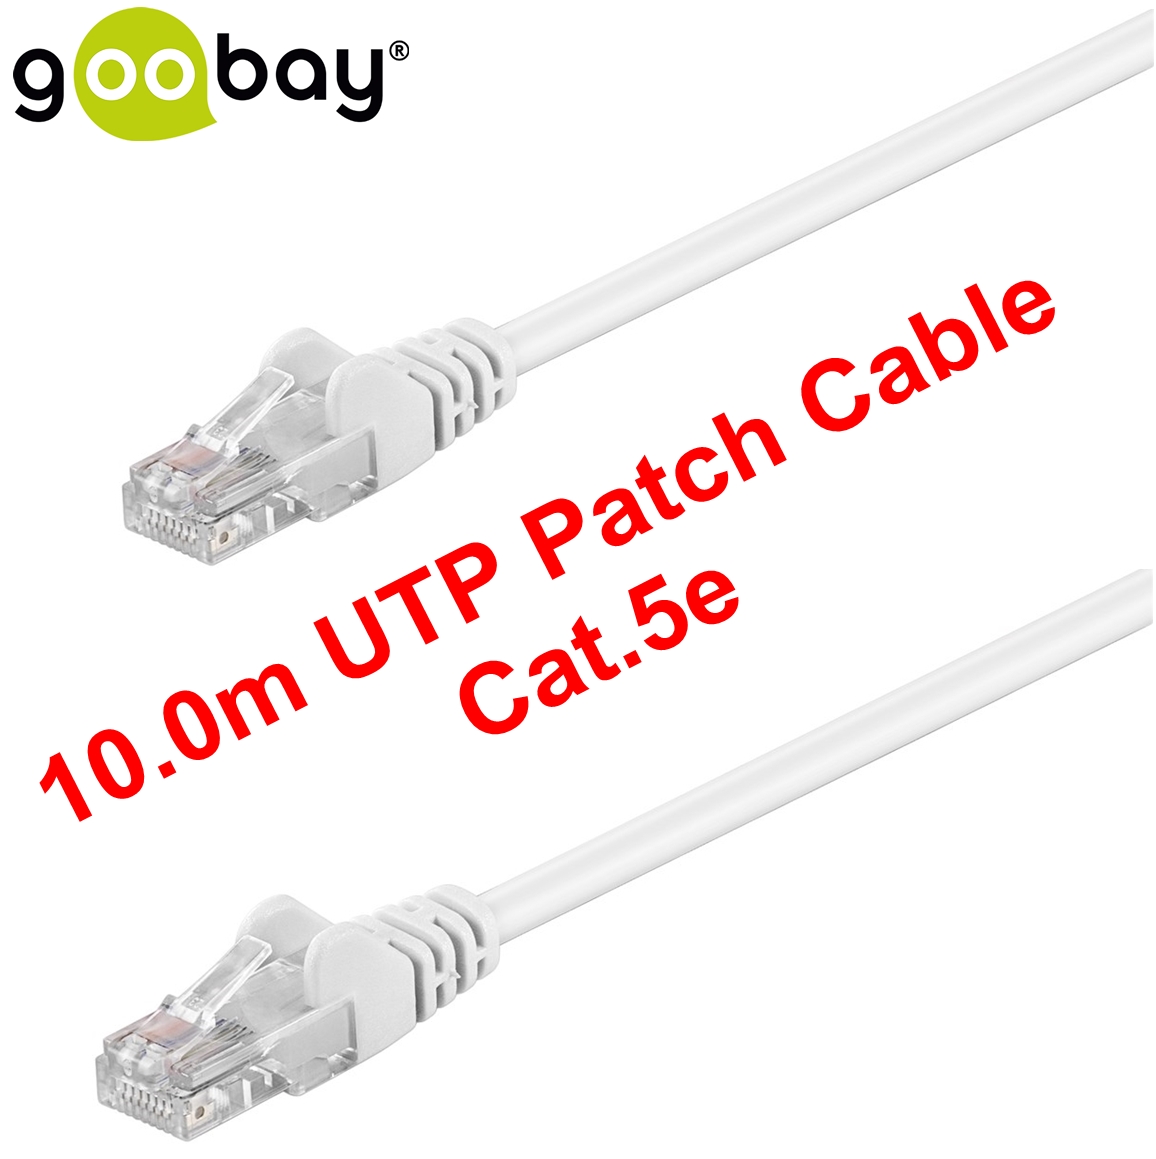 10.00m UTP Patch Cable Cat.5e GOOBAY (white)